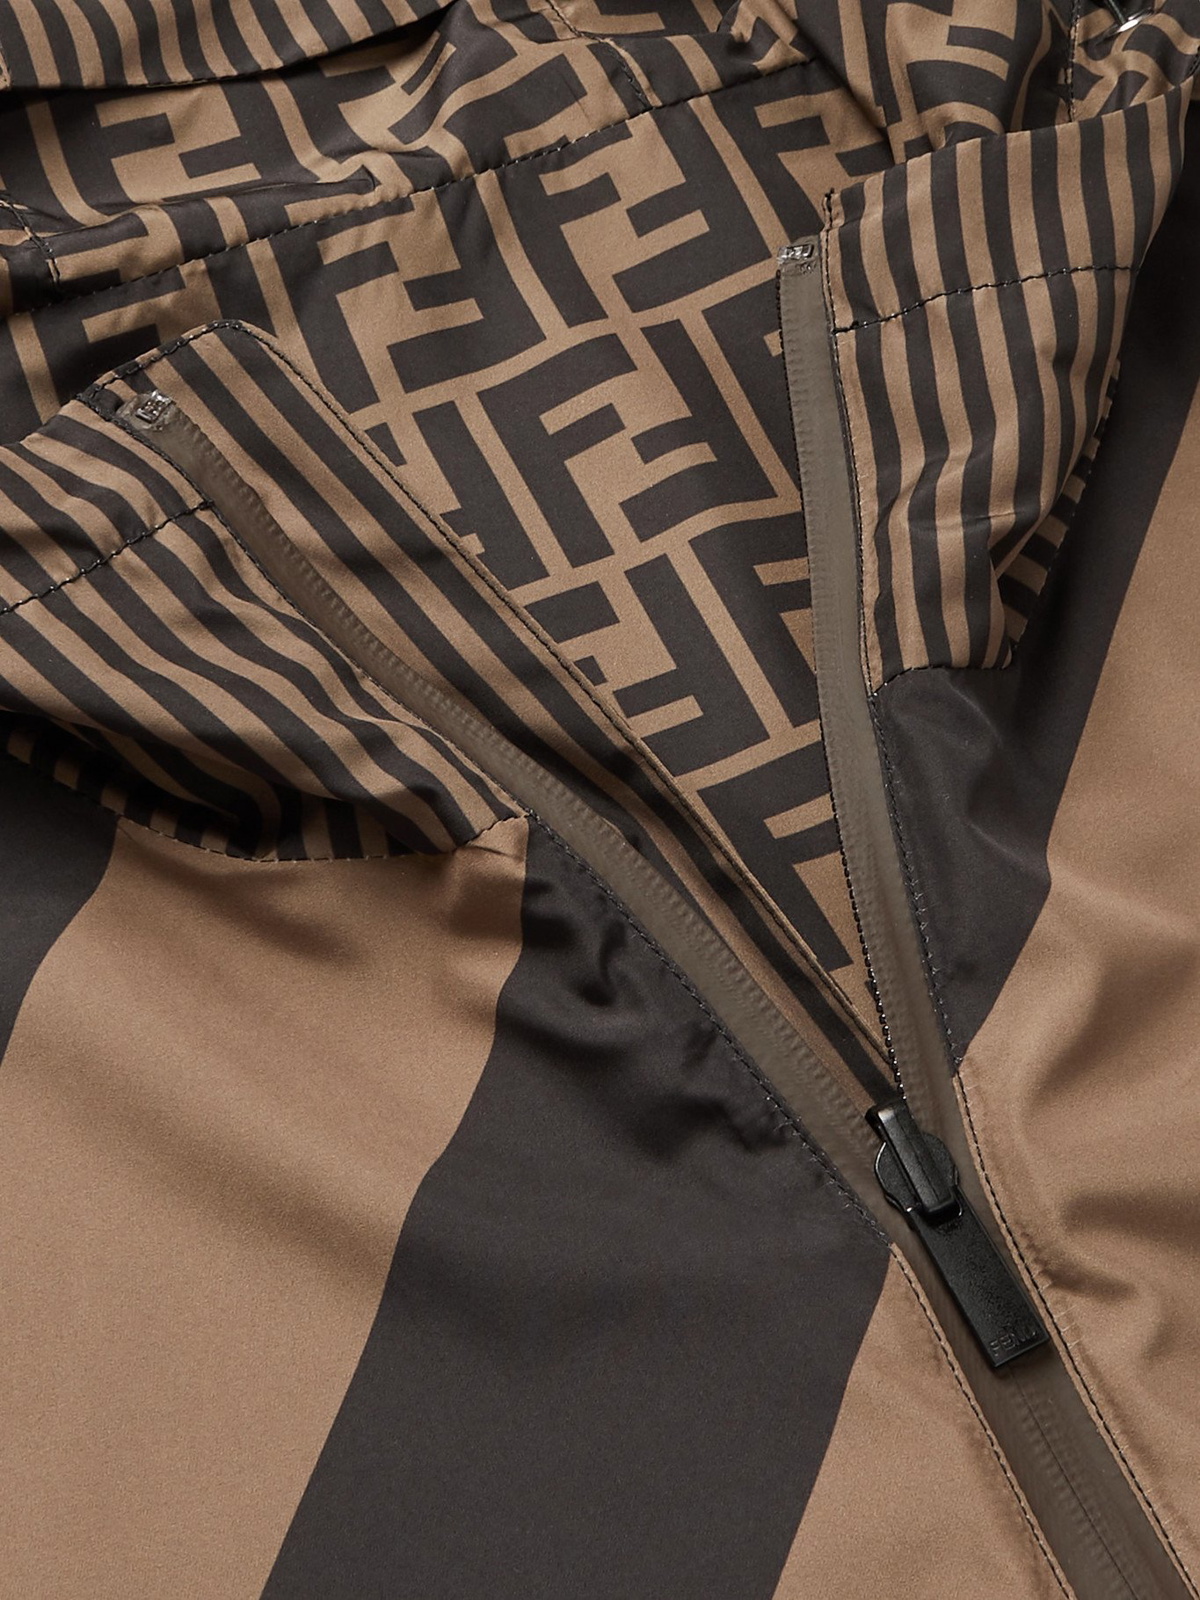 Fendi Reversible Jacket in Padded Nylon